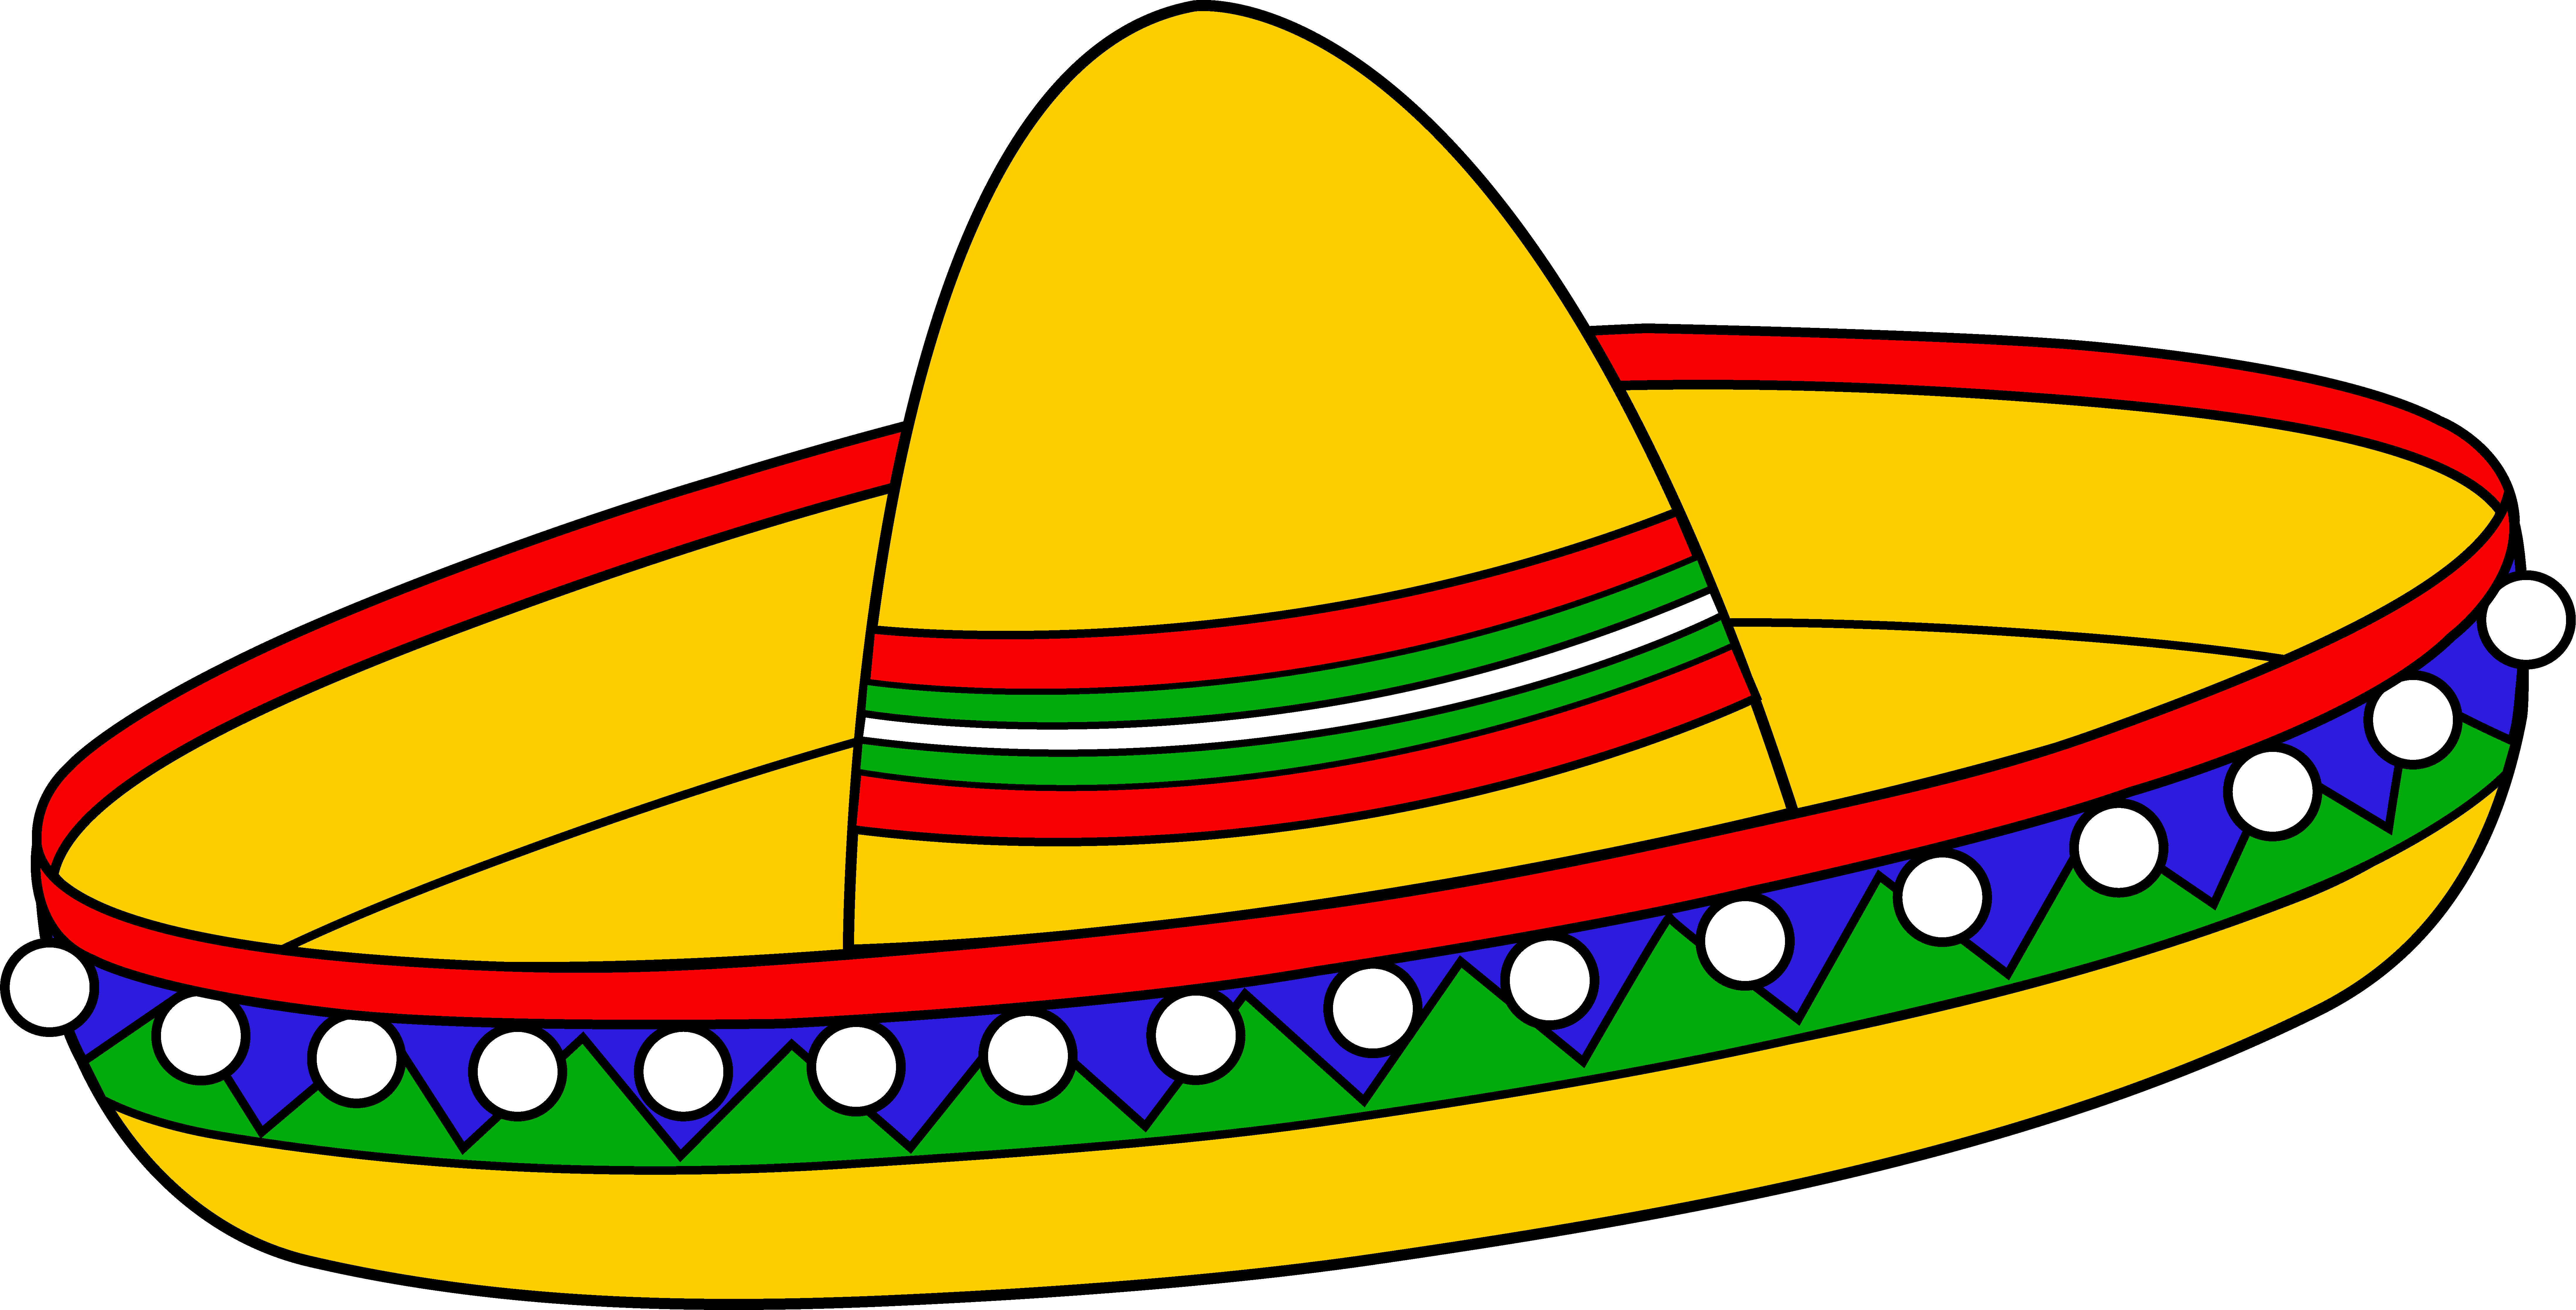 Colorful Mexican Sombrero Hat - Free Clip Art